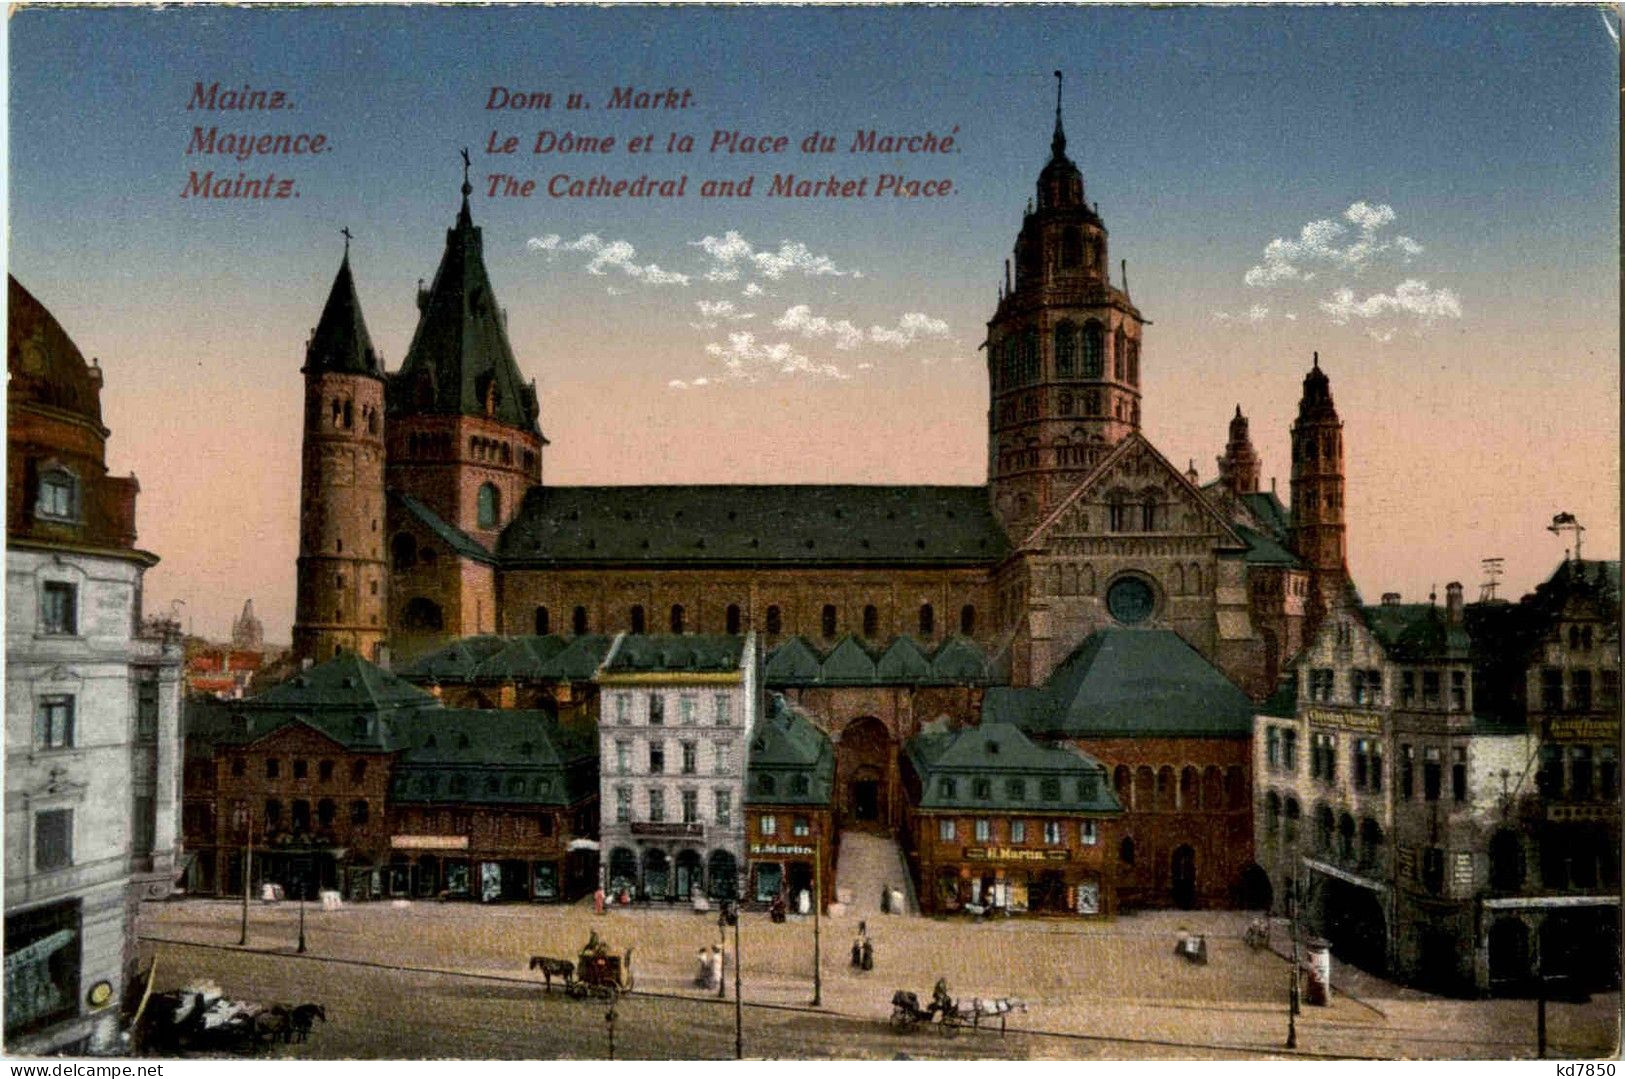 Mainz - Mainz